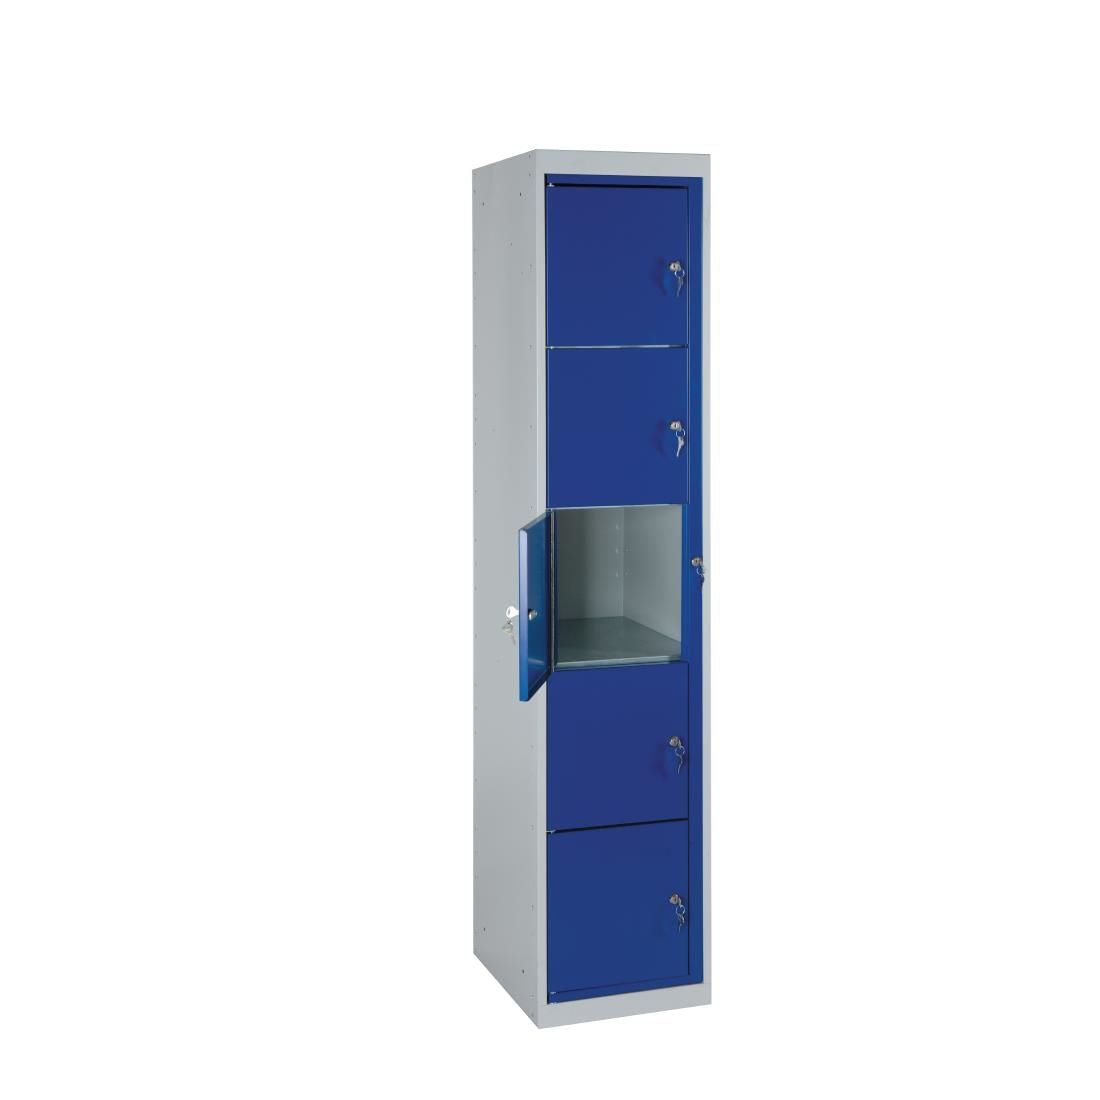 Garment 5 Door Dispensing Locker JD Catering Equipment Solutions Ltd